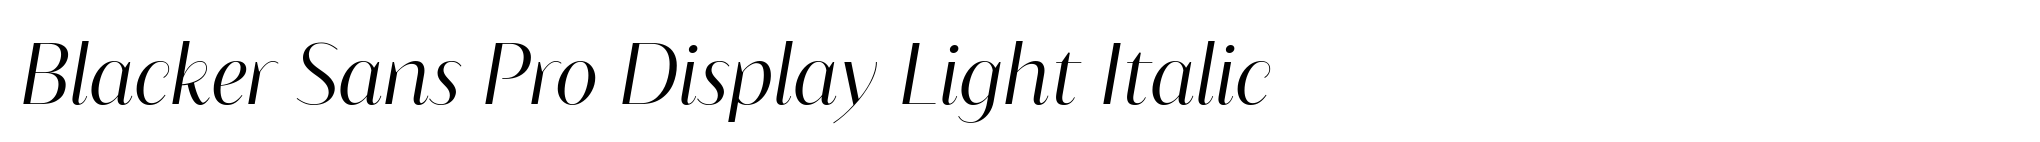 Blacker Sans Pro Display Light Italic image